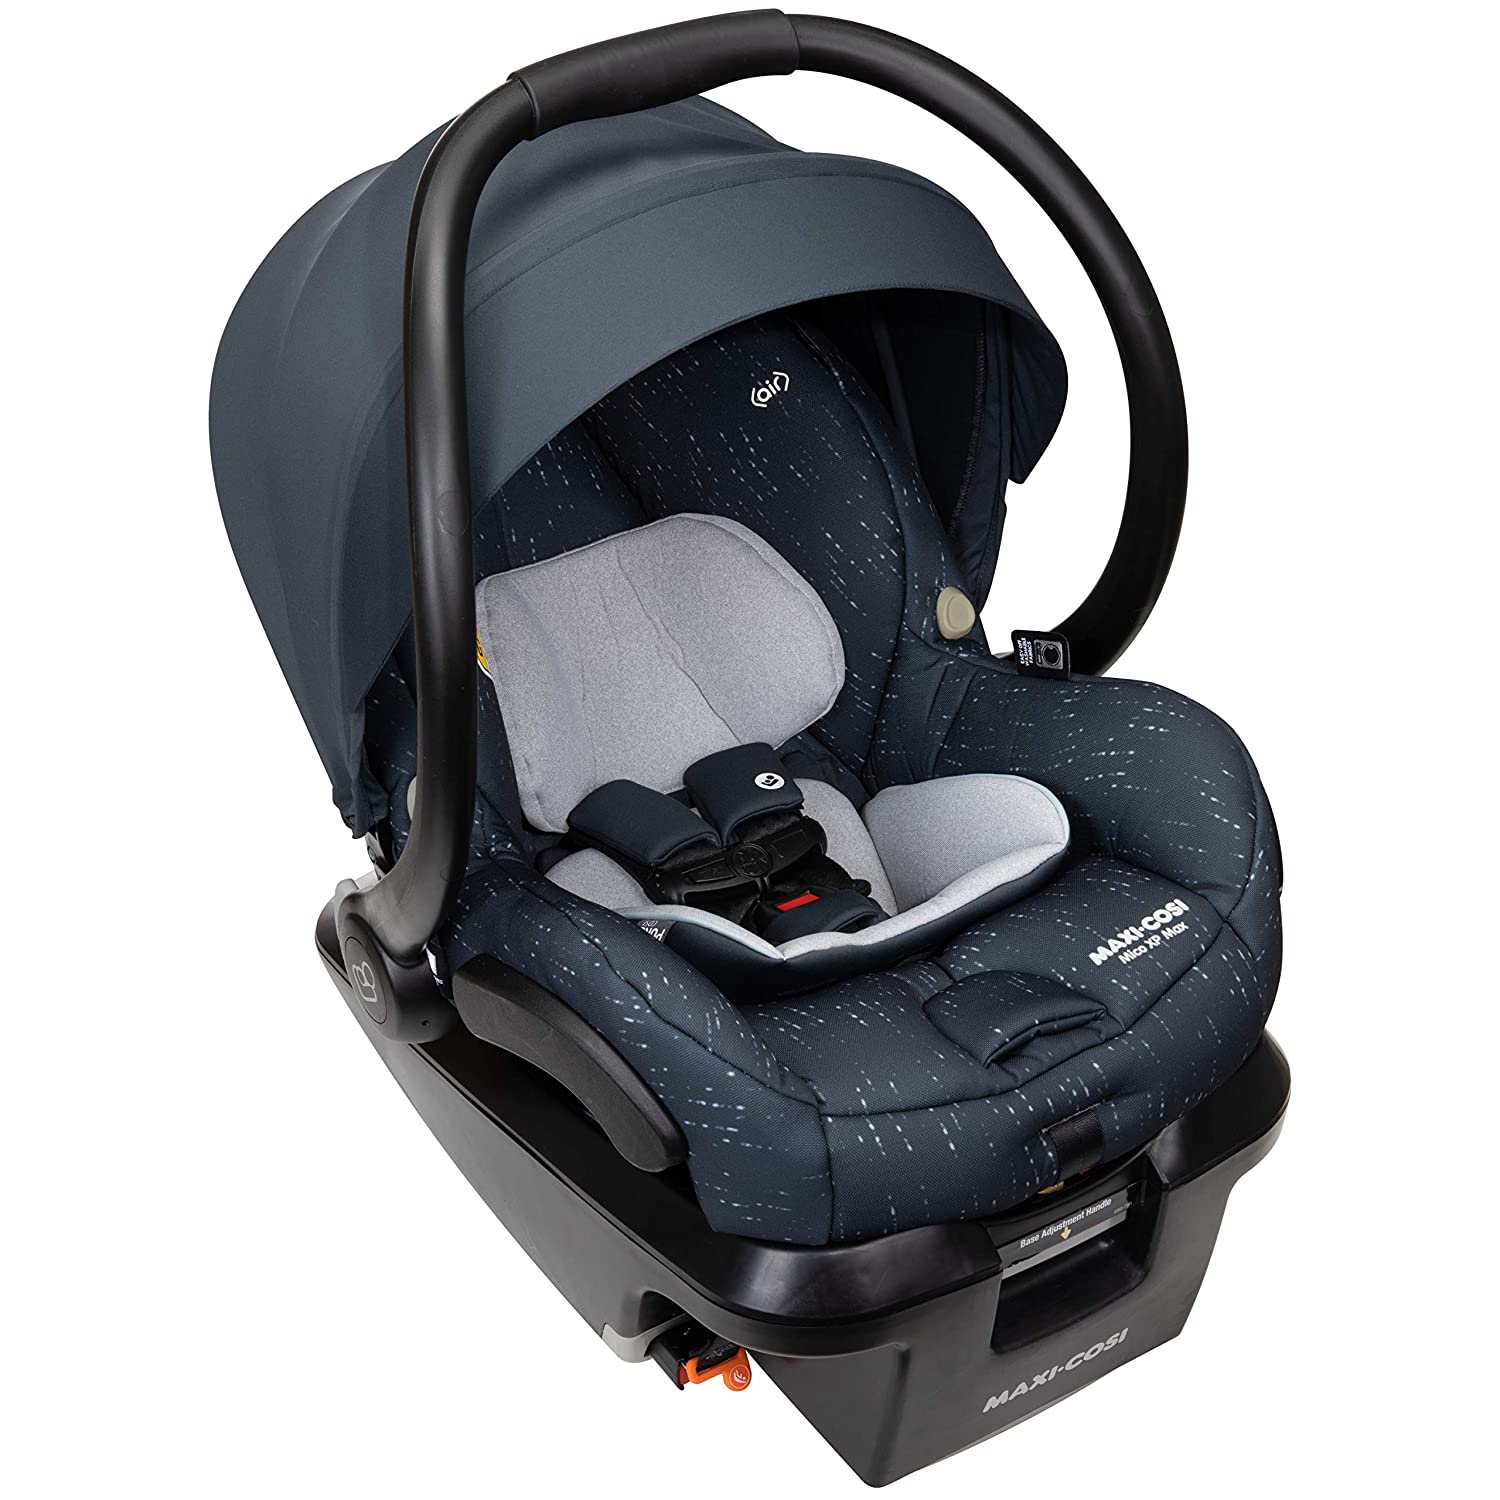 Bevestigen aan snijder duim RECALL: Maxi-Cosi & Safety 1st Infant Car Seats – CarseatBlog